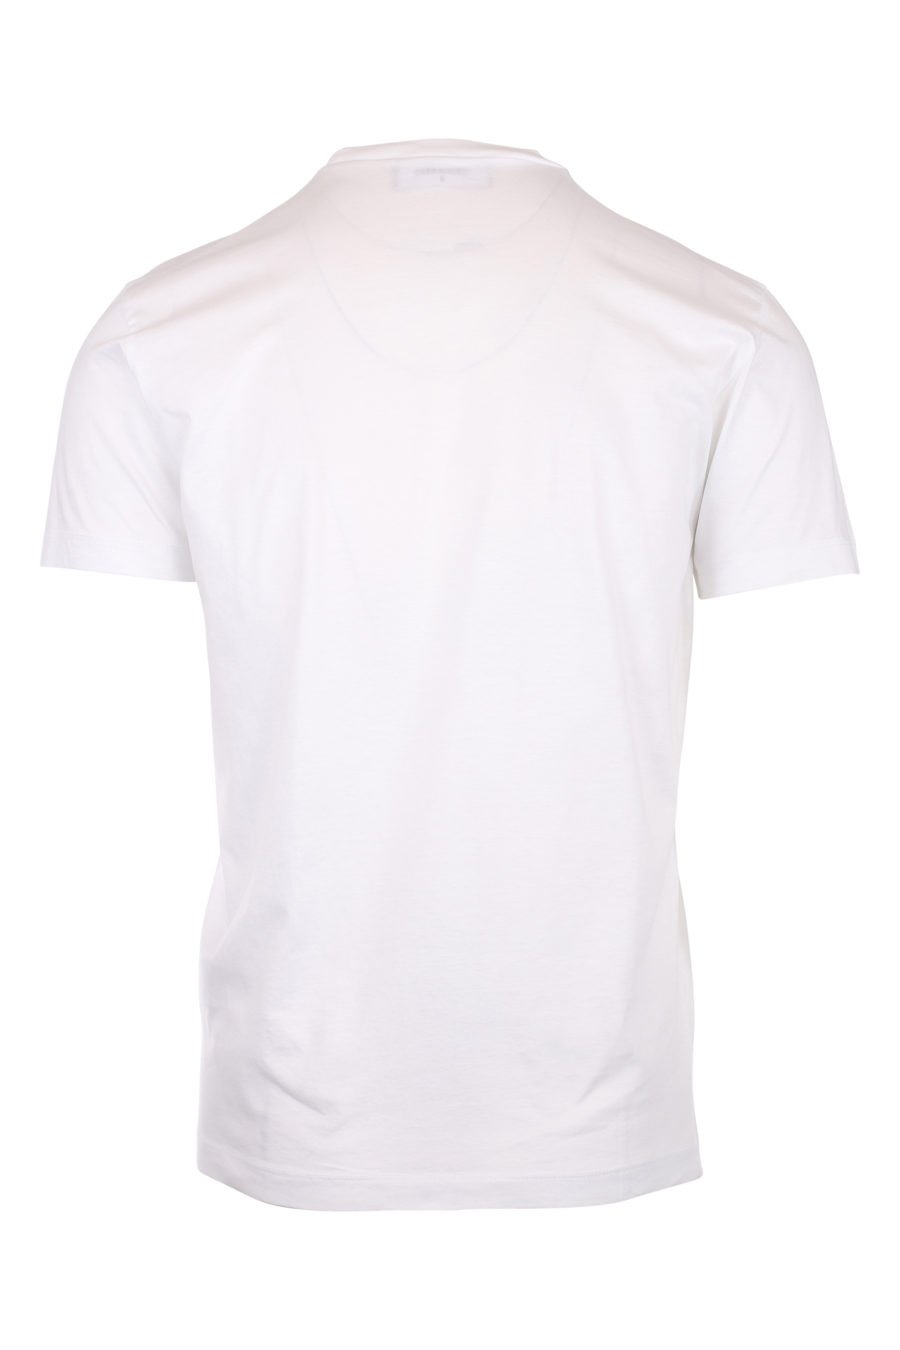 T-shirt branca com o logótipo "icon" - IMG 9768